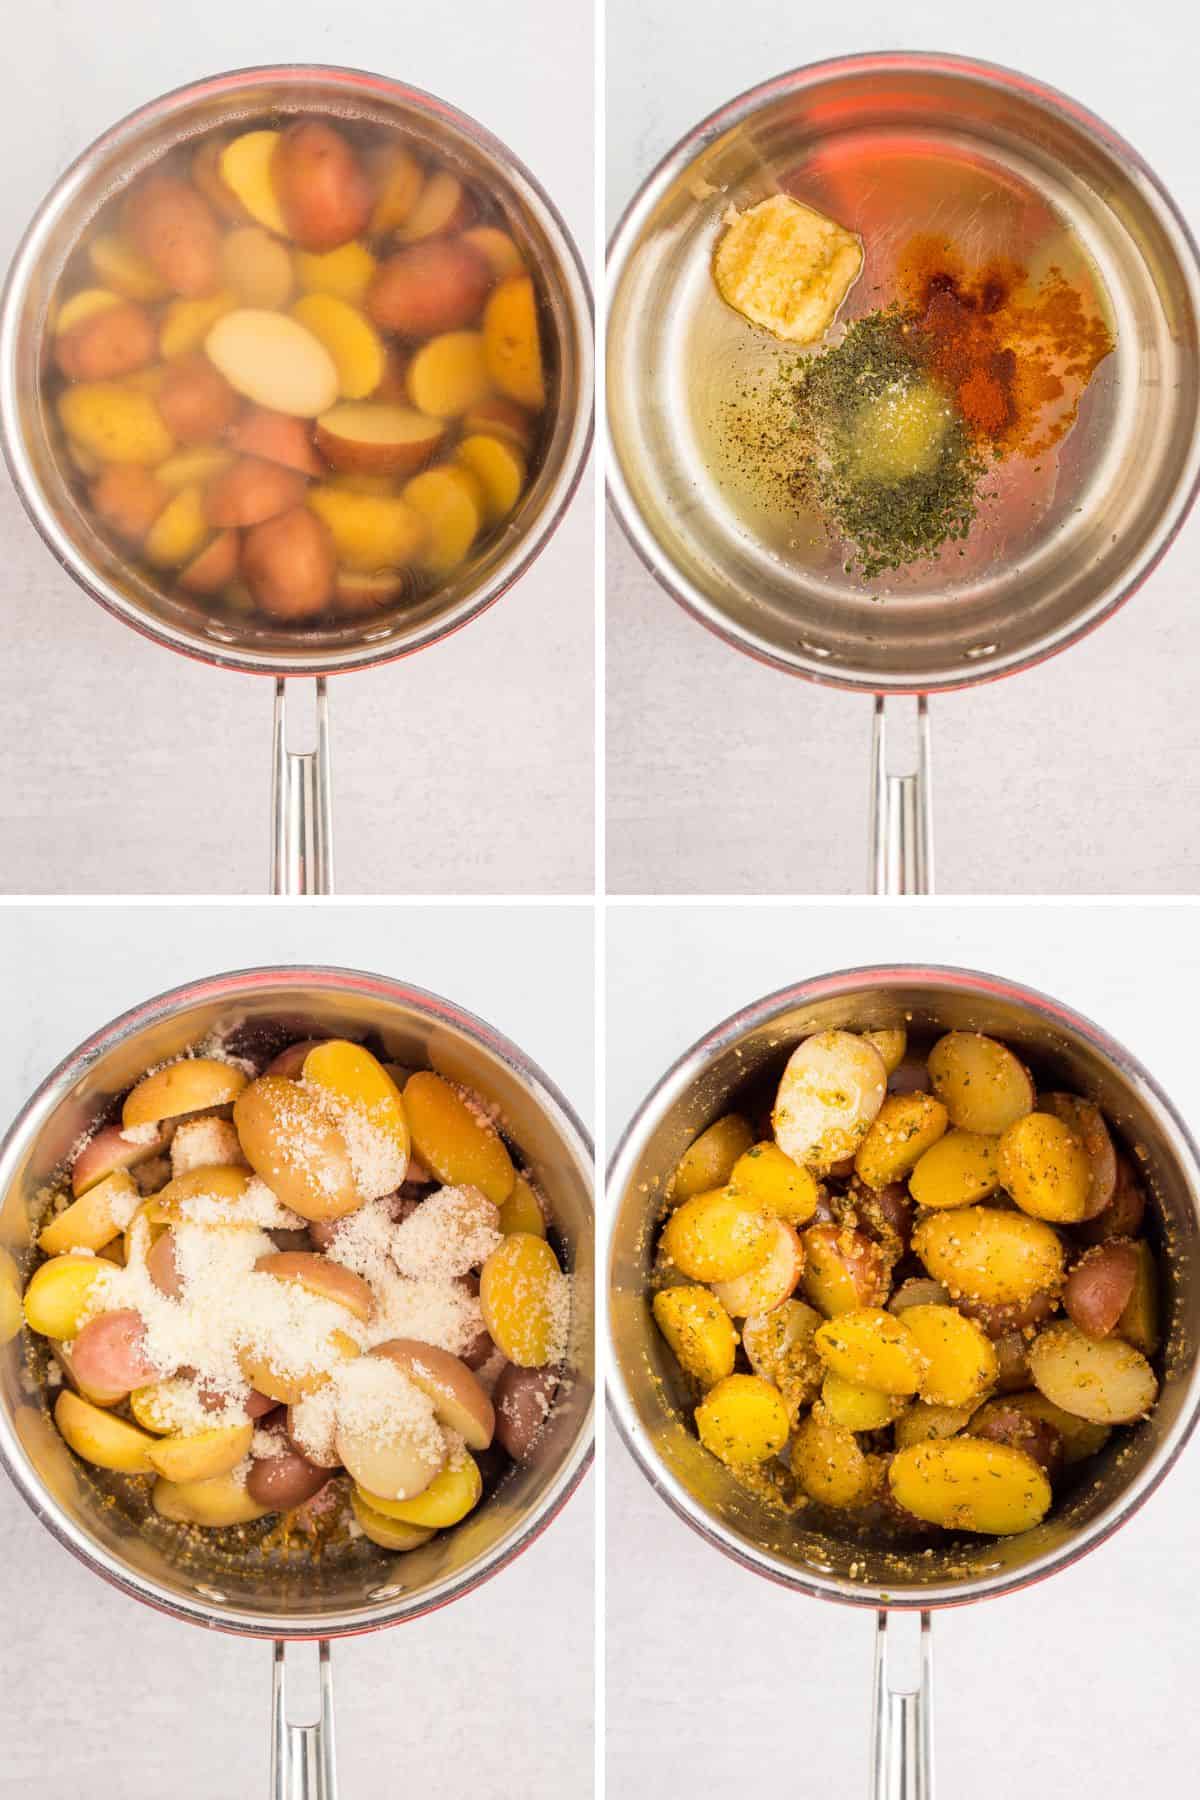 4 photos showing the process of making garlic parmesan roasted potatoes.